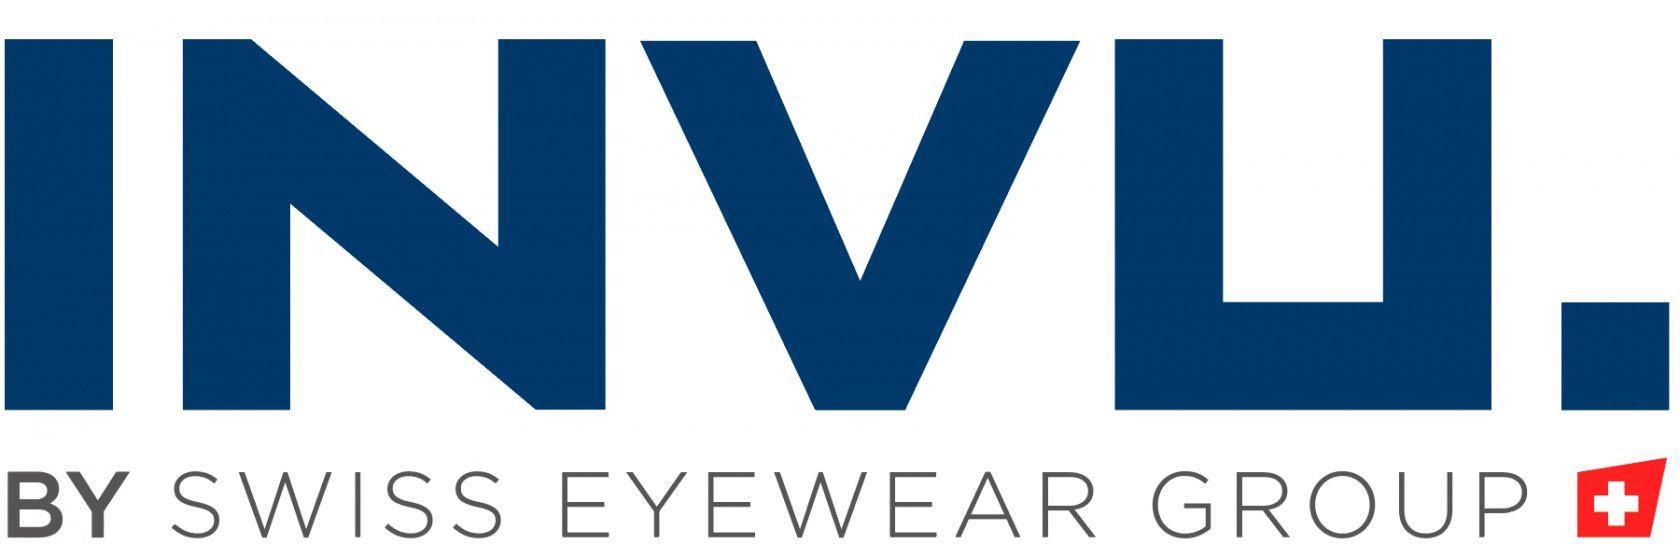 Eyewear Company Logo - Welcome to Swiss Eyewear Group 2019